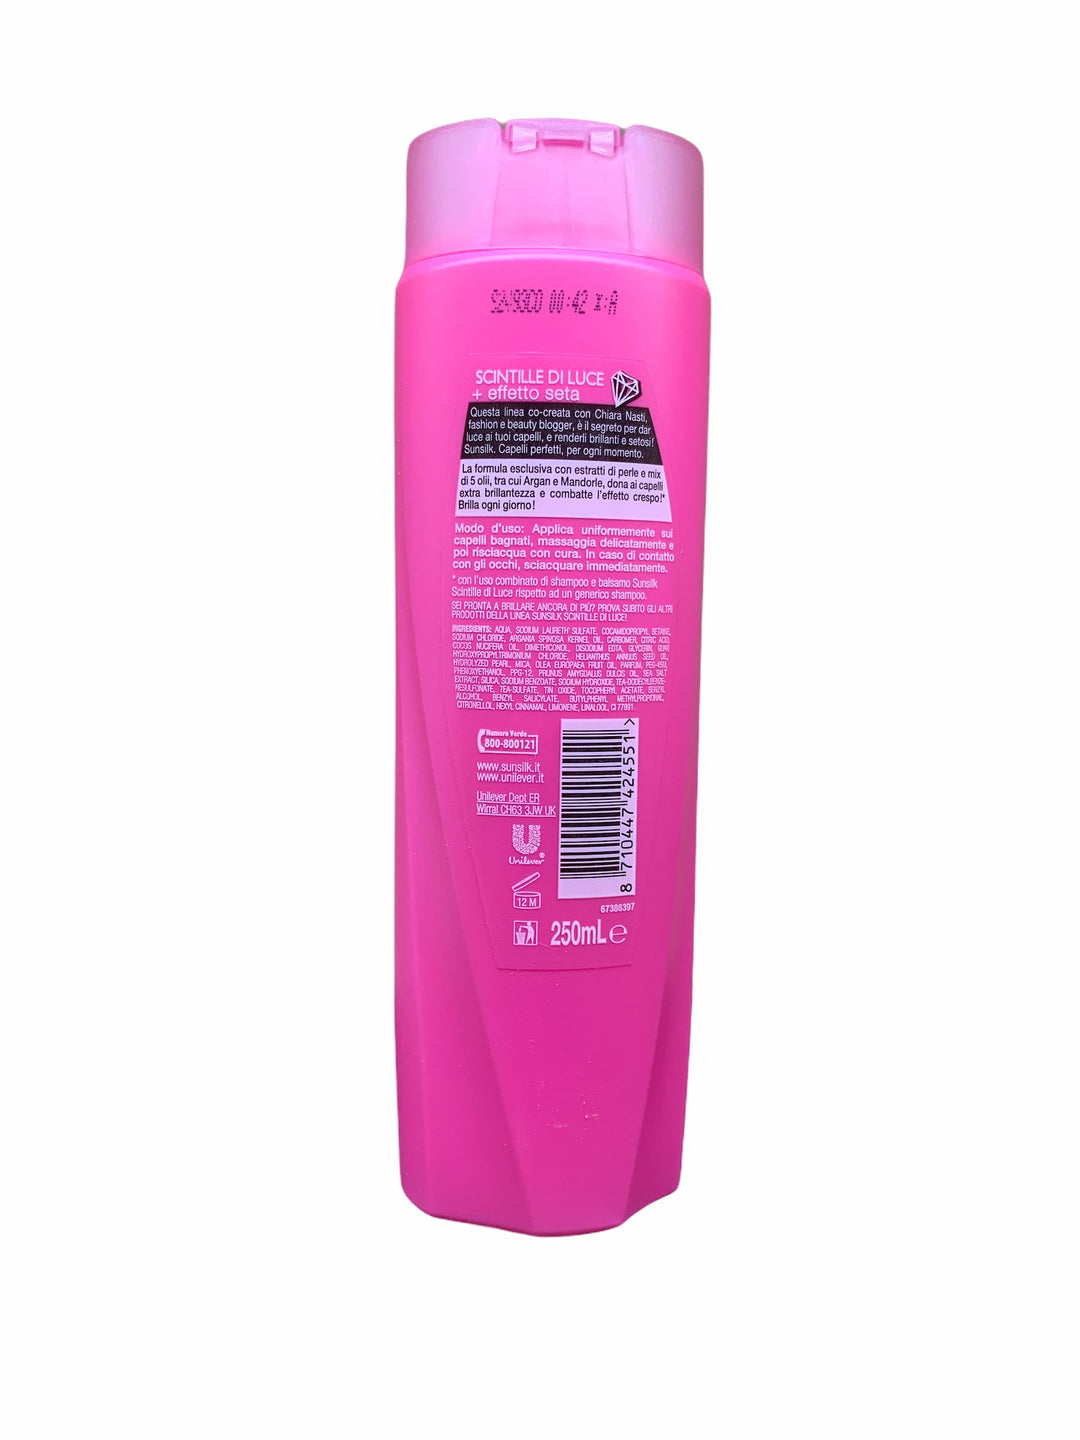 Sunsilk shampoo scintille di luce 250 ml